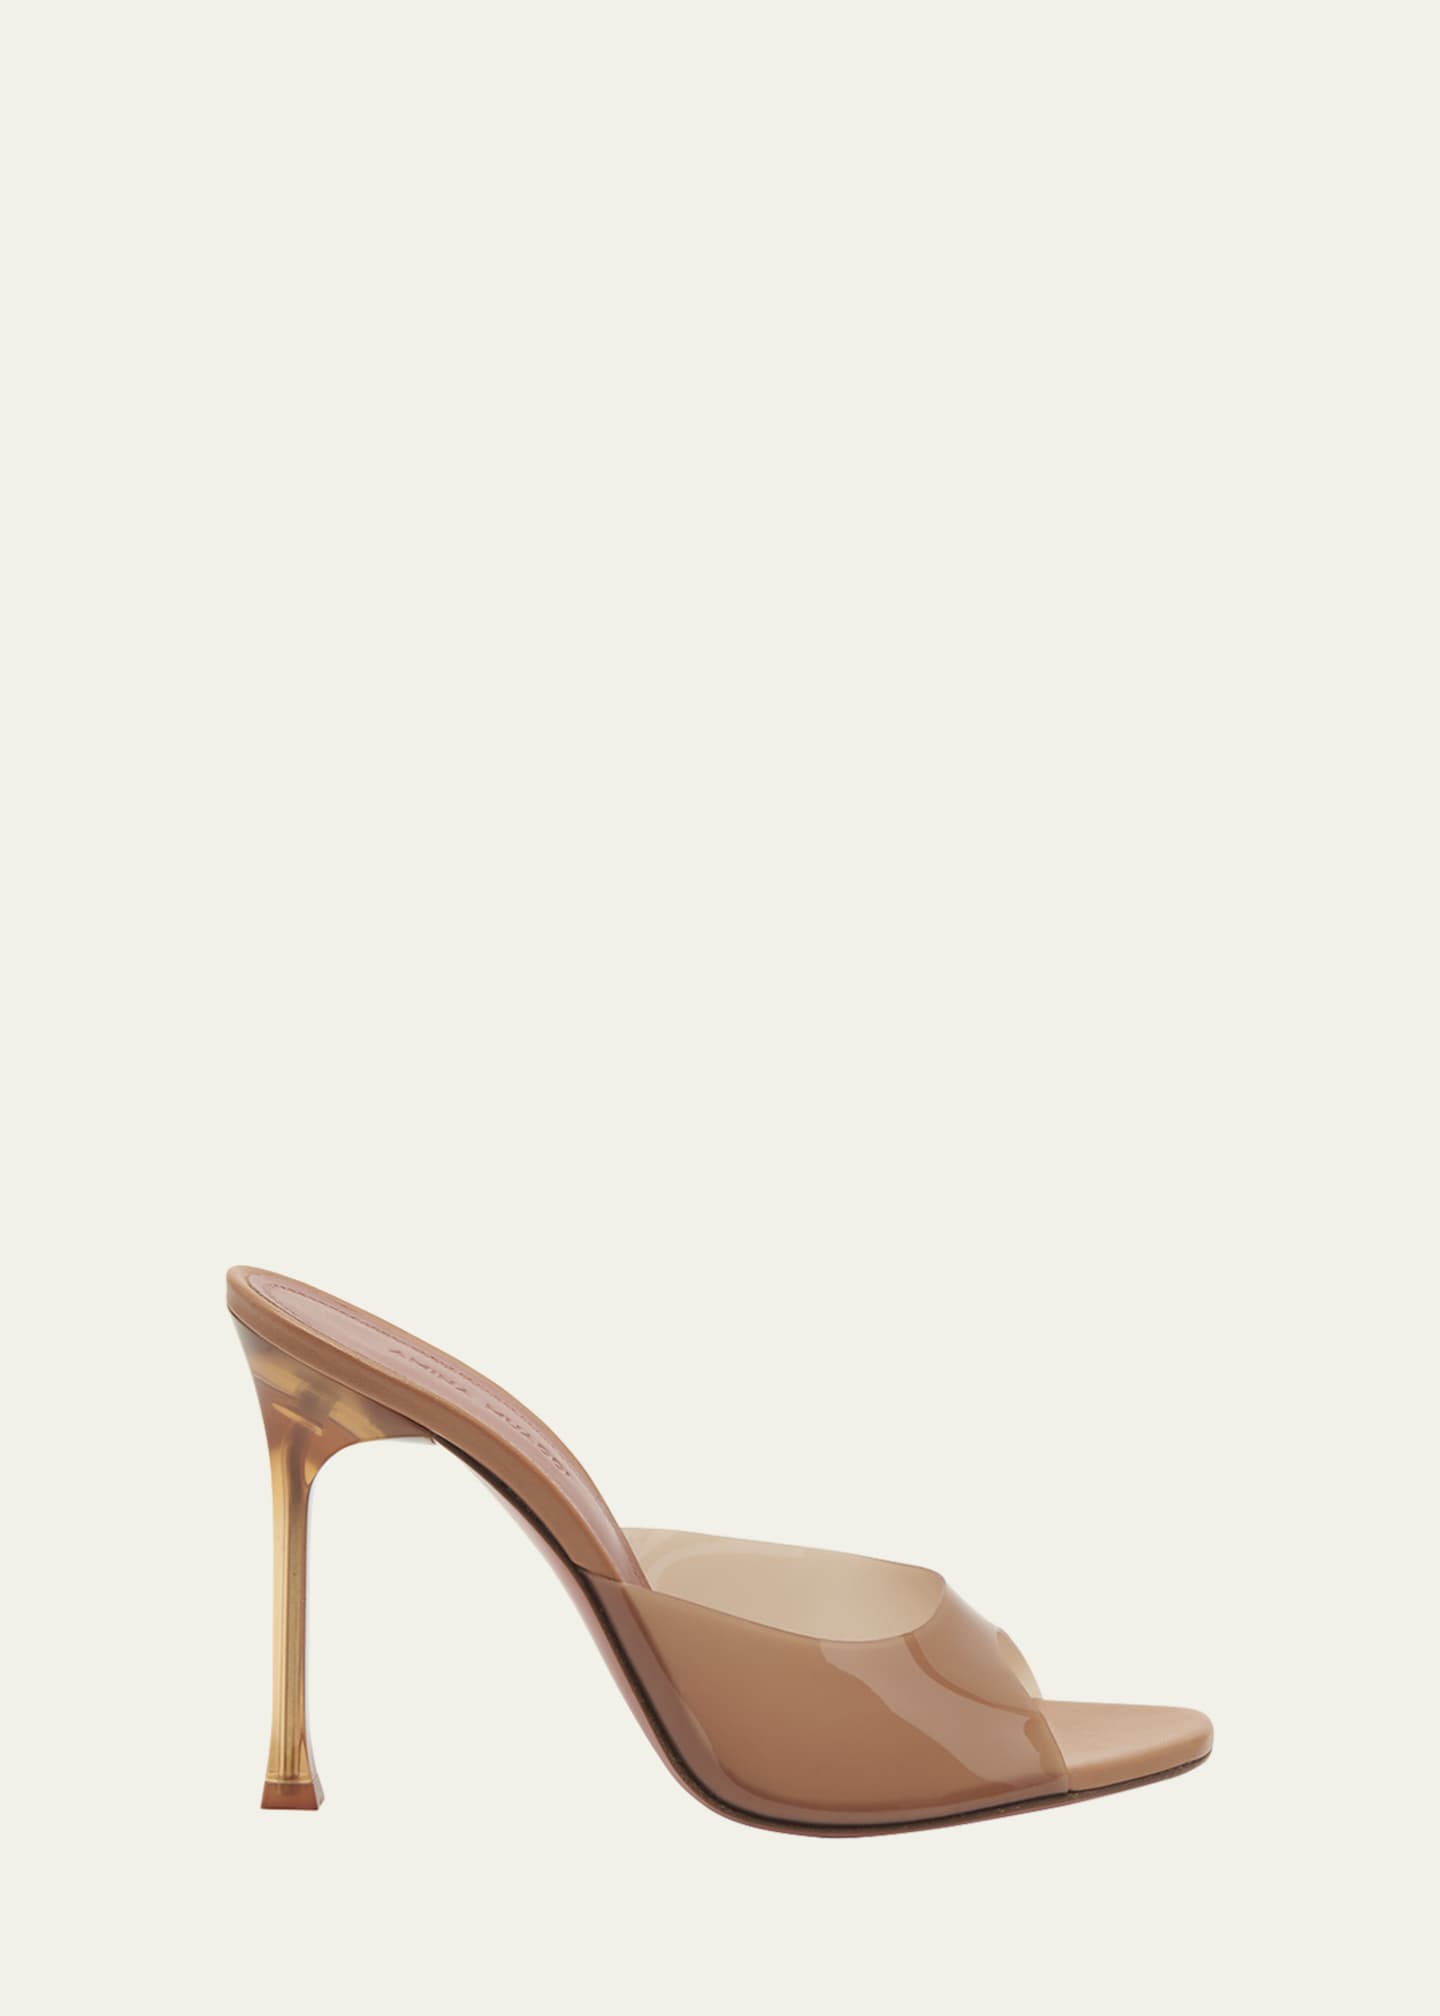 Amina Muaddi Alexa Clear Stiletto Mule Sandals - Bergdorf Goodman